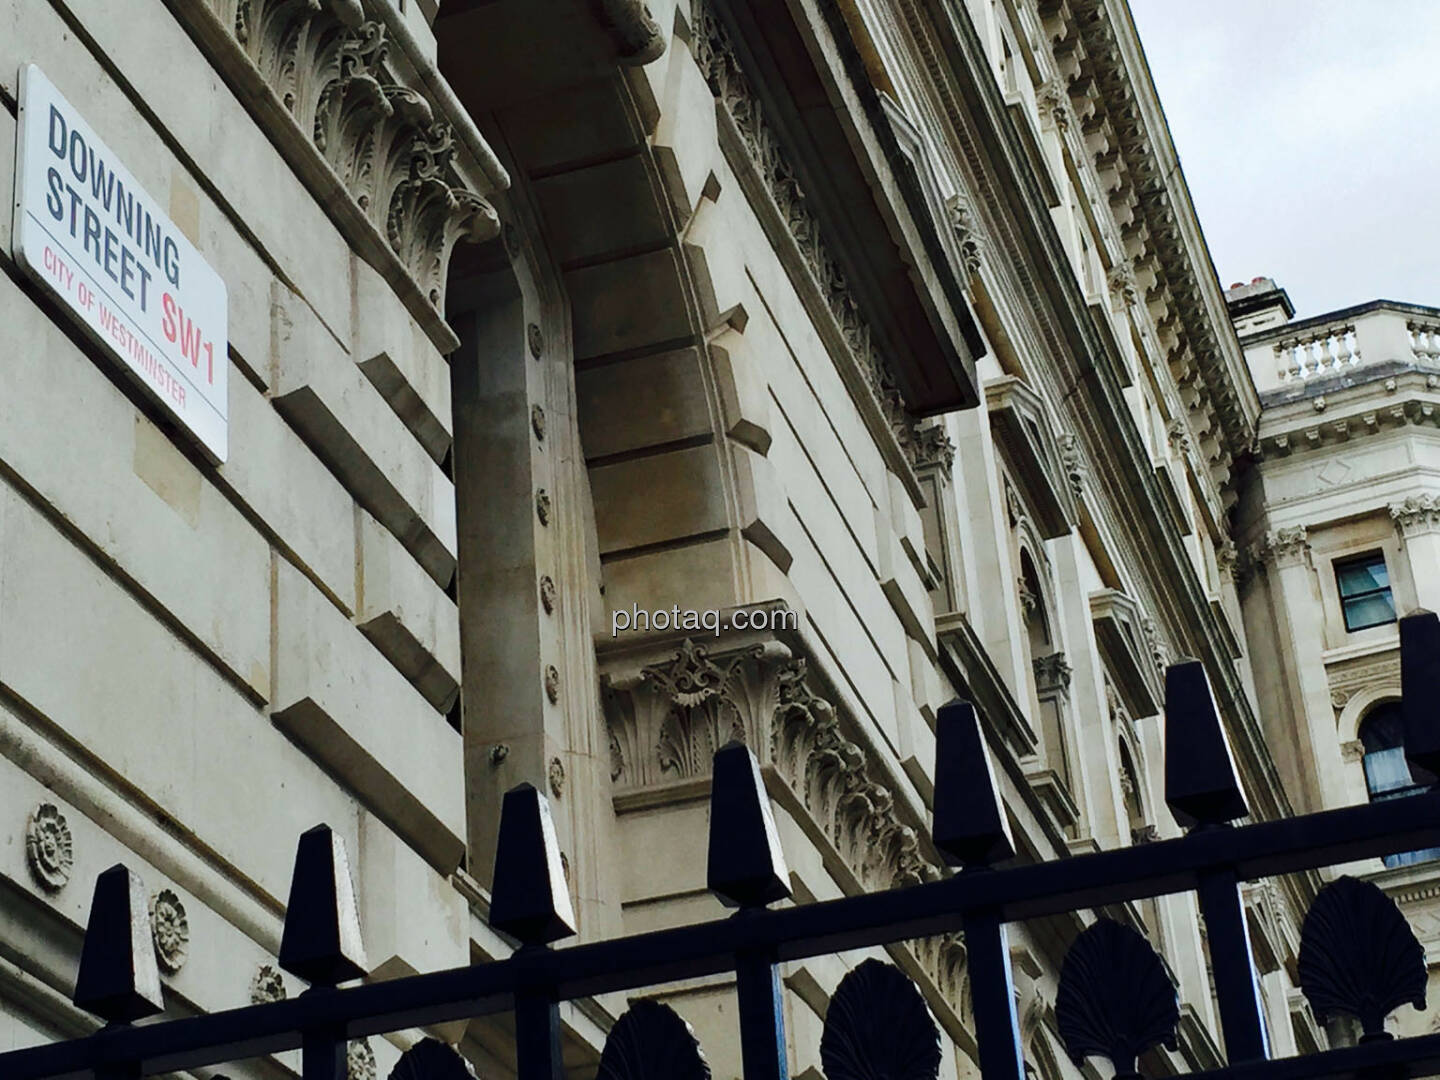 Downing Street 10, London